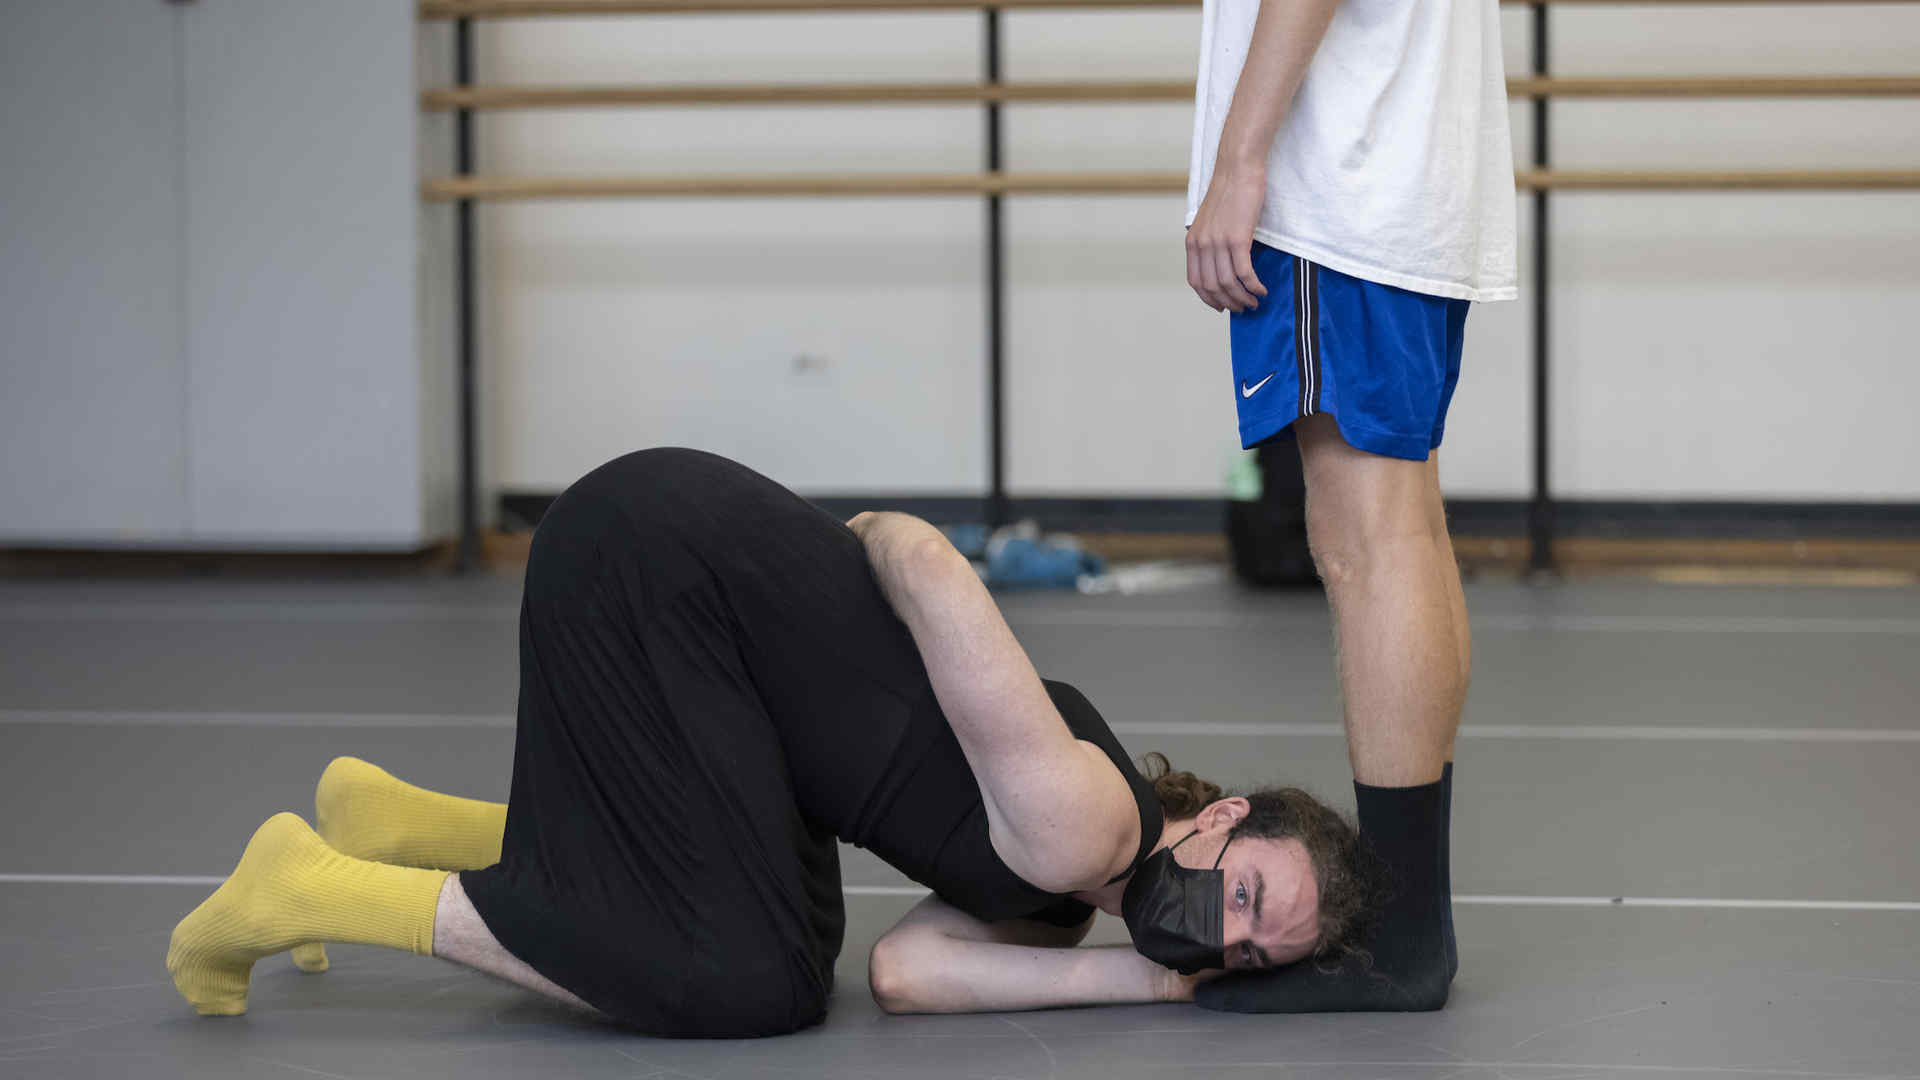 A dancer on the studio floor beside a dancer standing upright